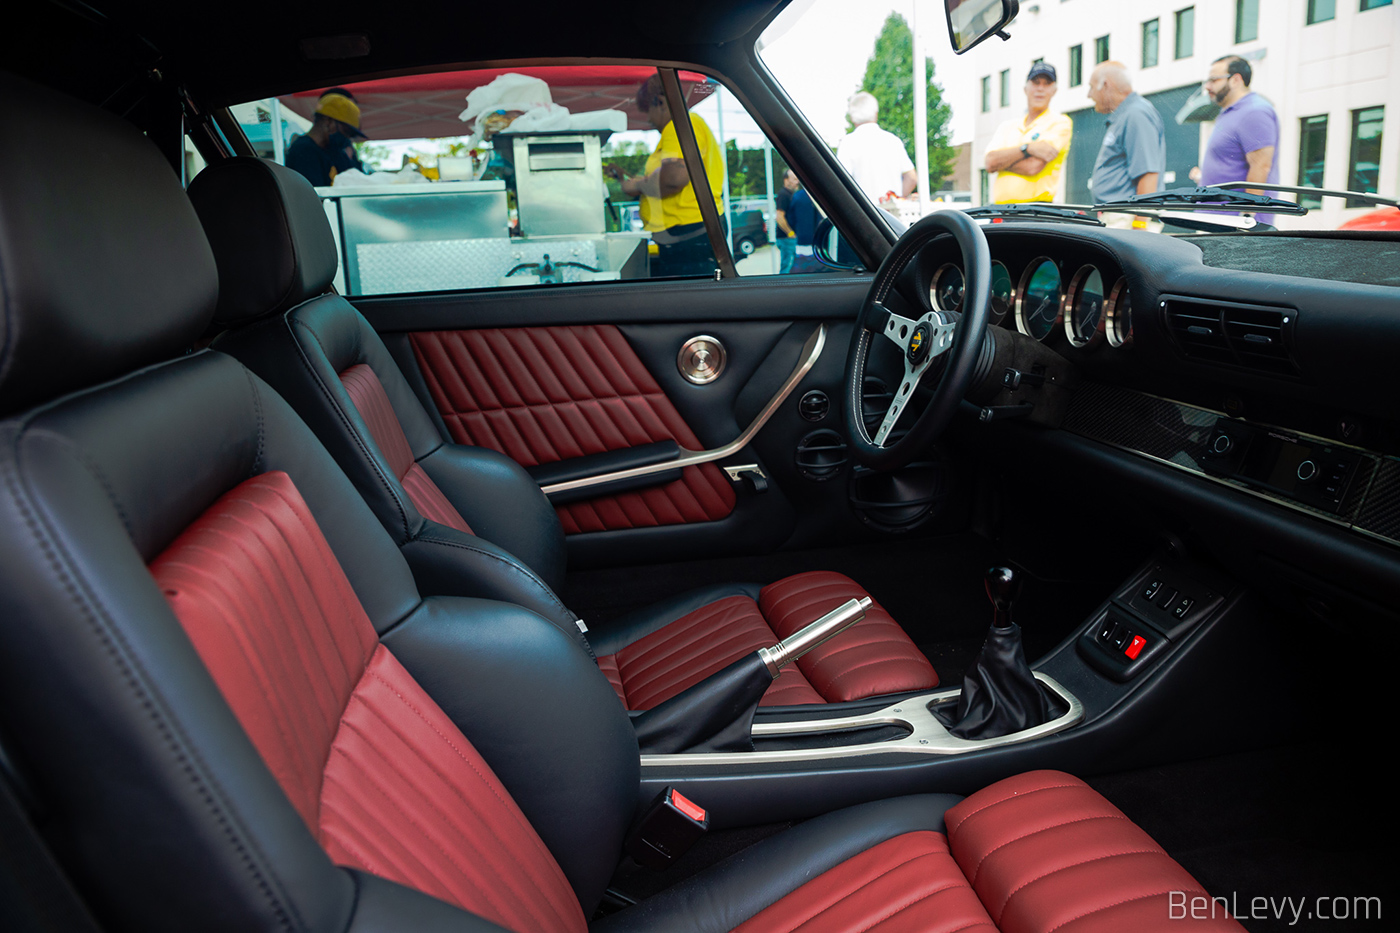 Custom Black and Maroon Leather Interior in Porsche 911